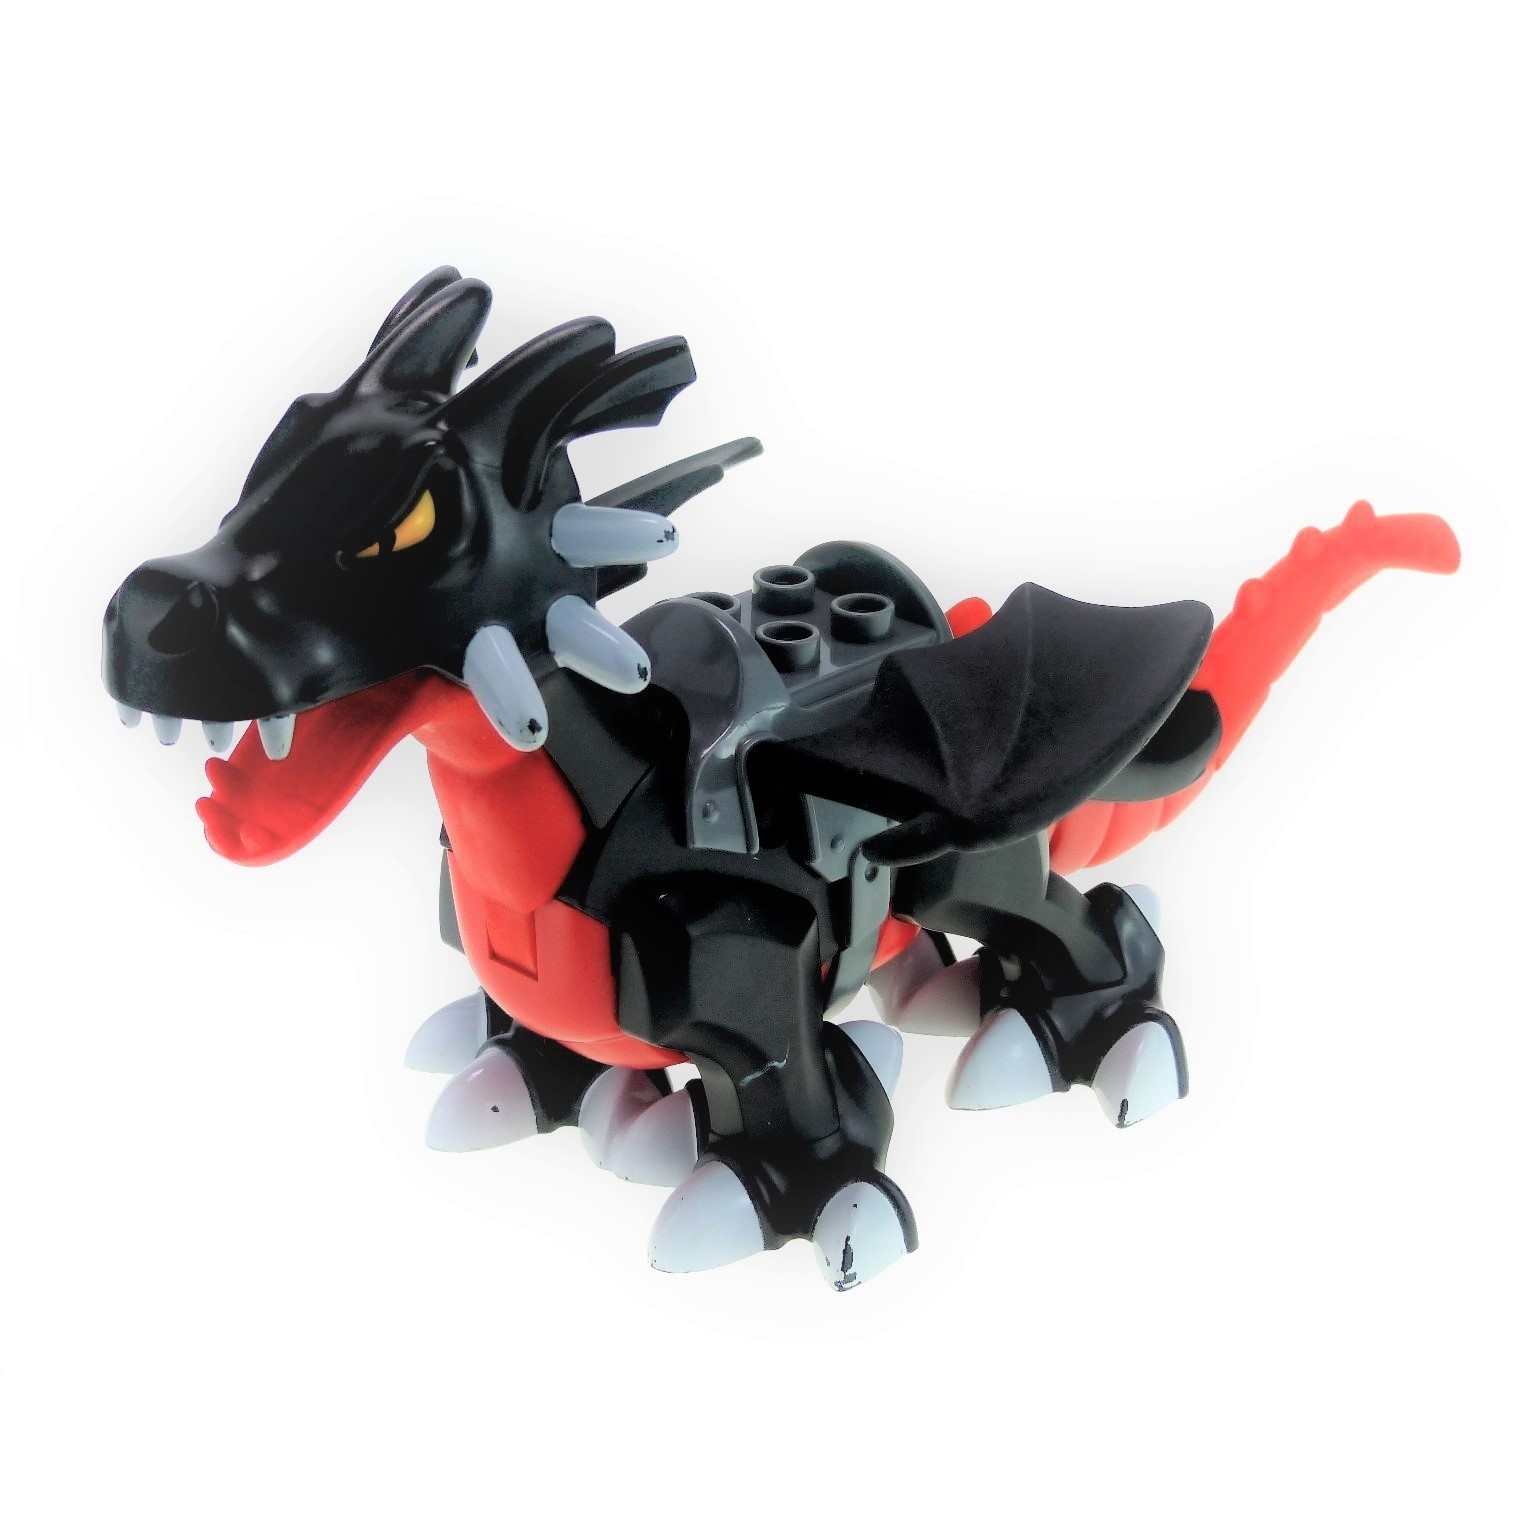 1x Lego Duplo Tier Drache schwarz rot groß Sattel Dragon Tower 5334c01pb02 